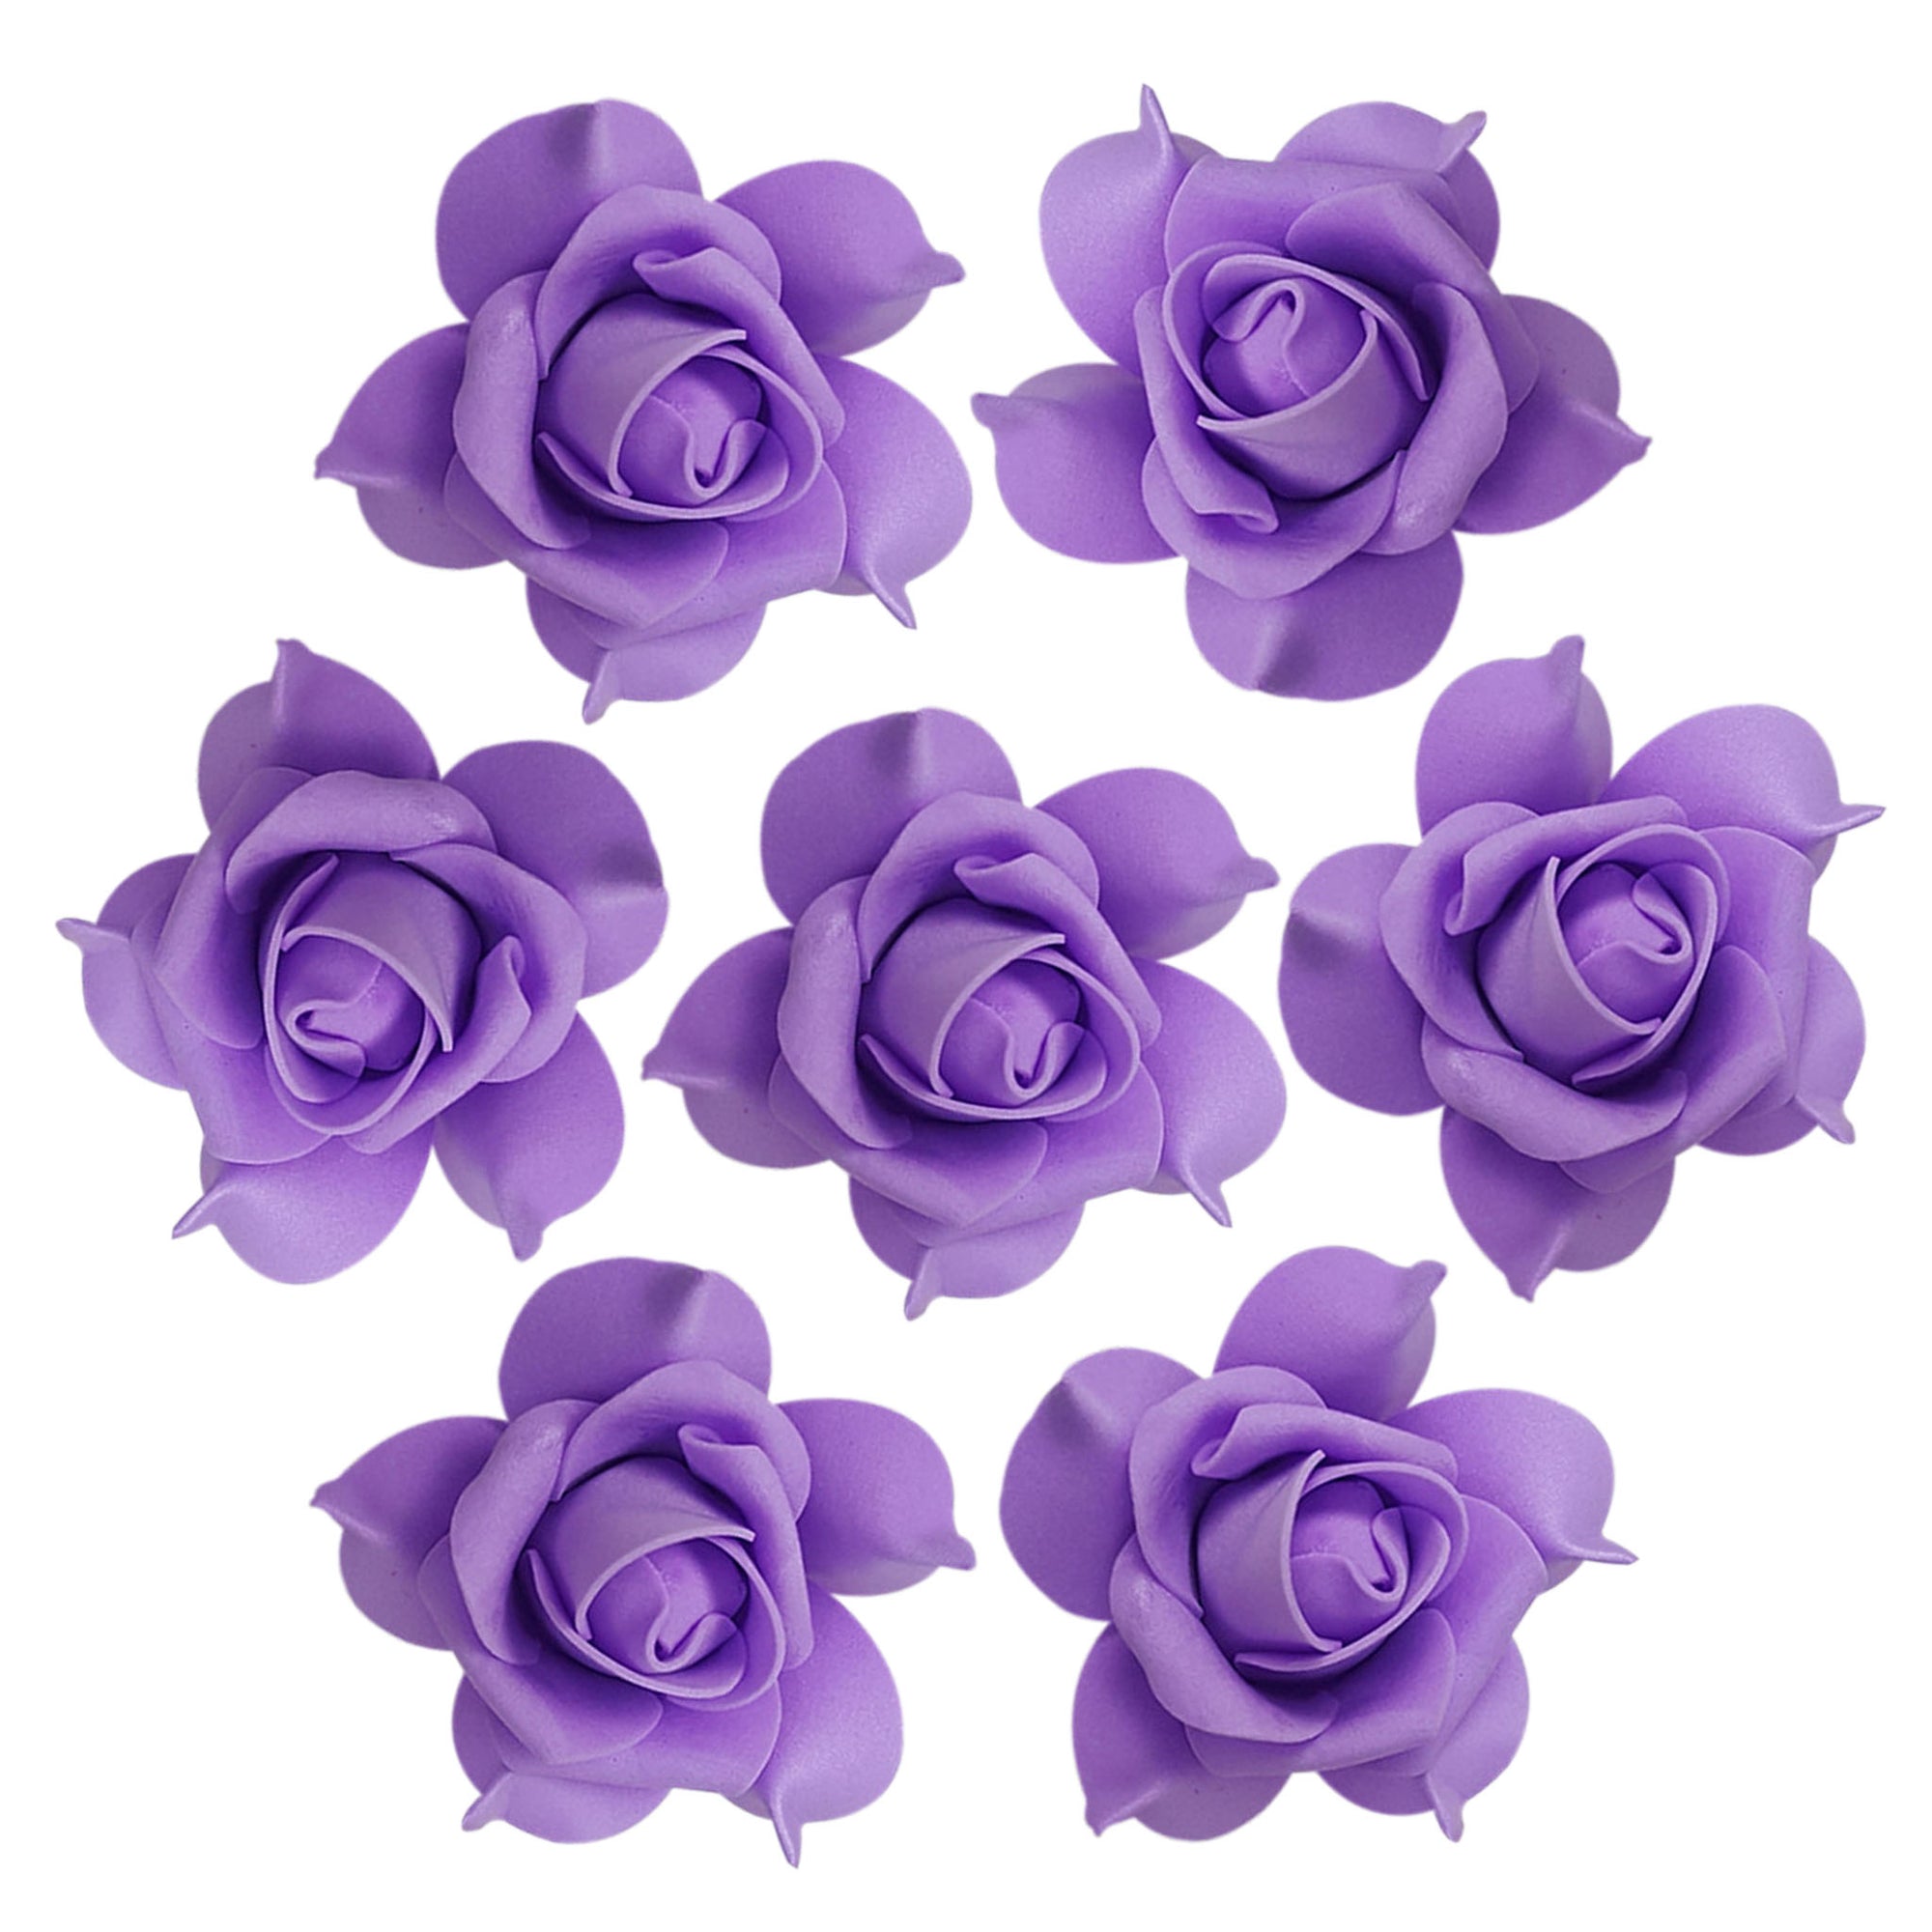 Bulk Flowers Heads Artificial Roses Wholesale 100 pcs for DIY Flower Balls